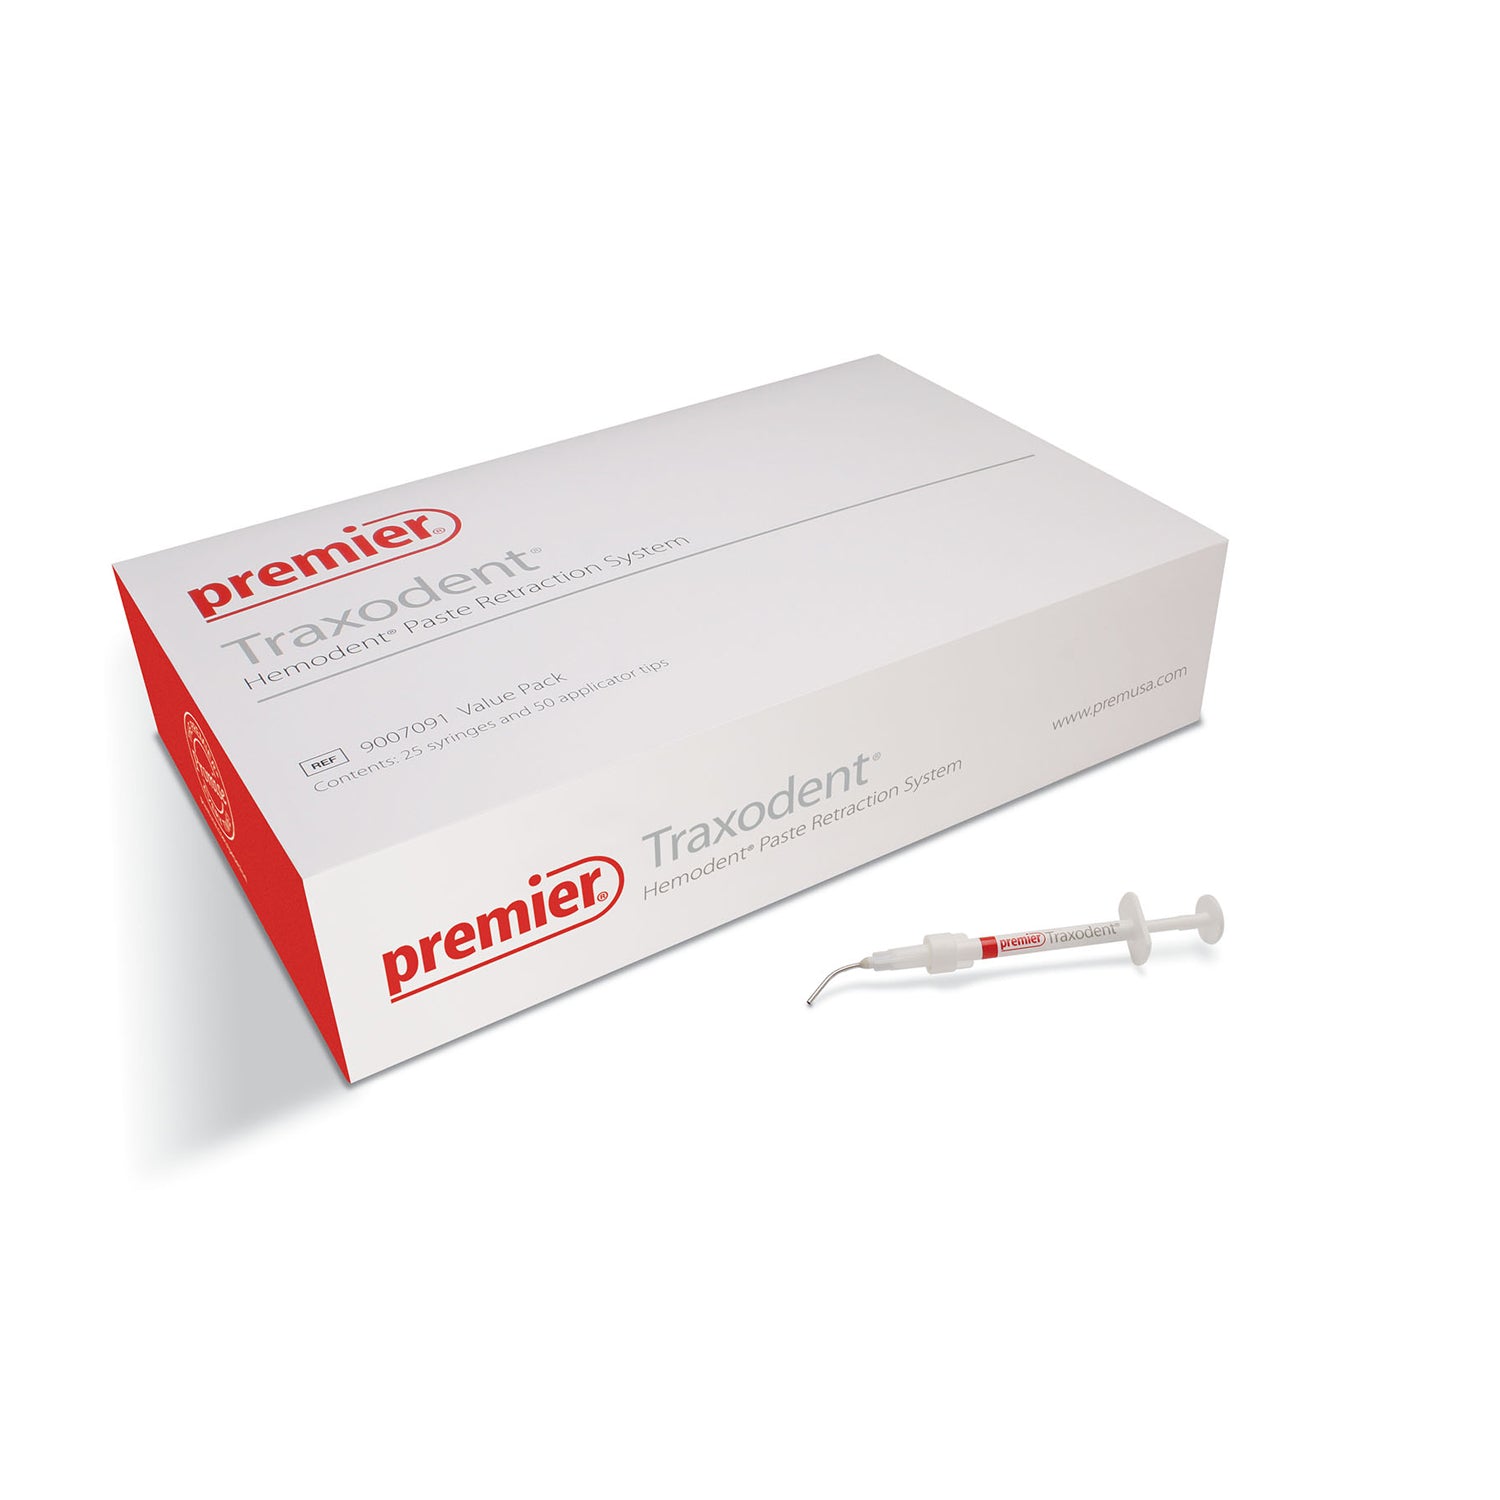 Premier Traxodent Hemodent Paste Retraction System Value Kit (25 Syringes, 50 Tips)